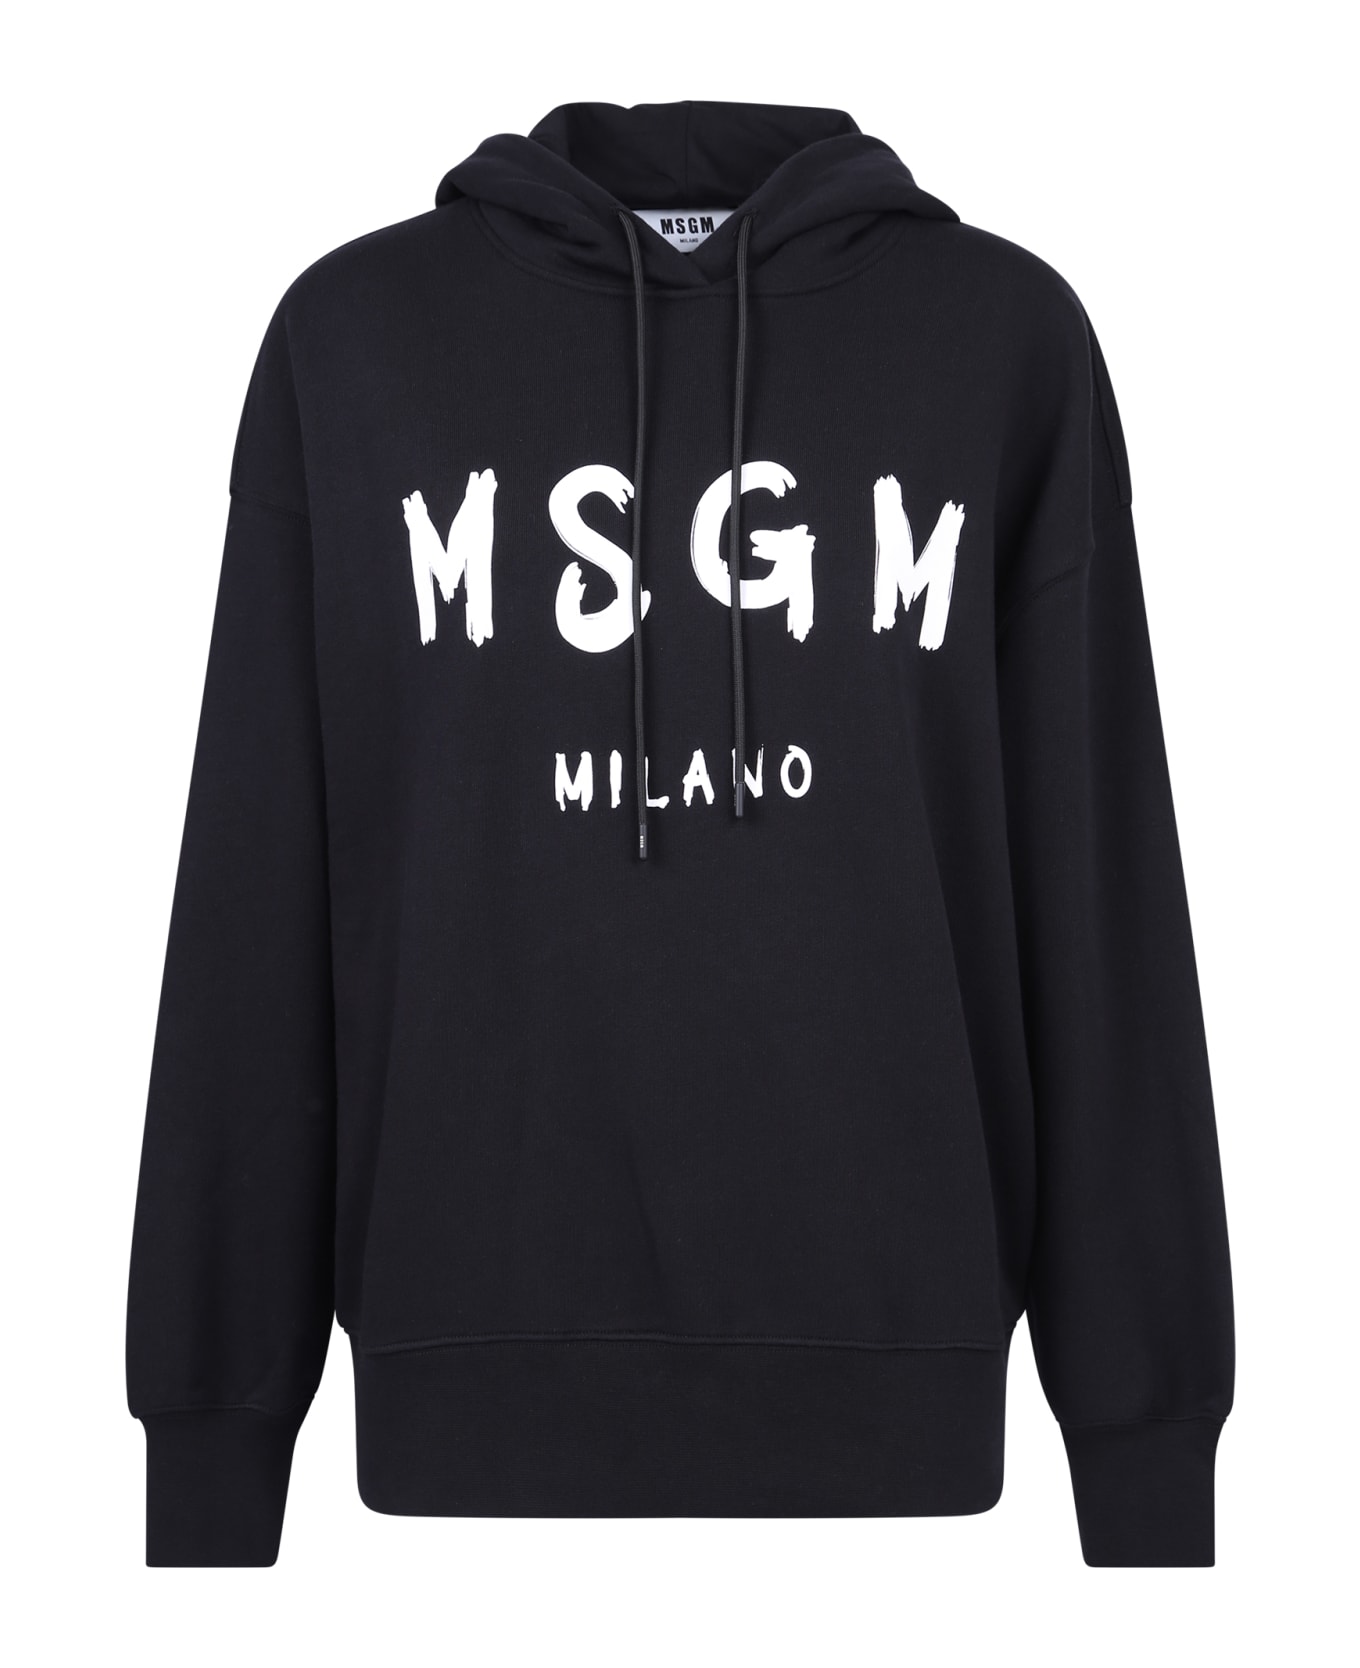 MSGM Relaxed Fit Sweatshirt - Black